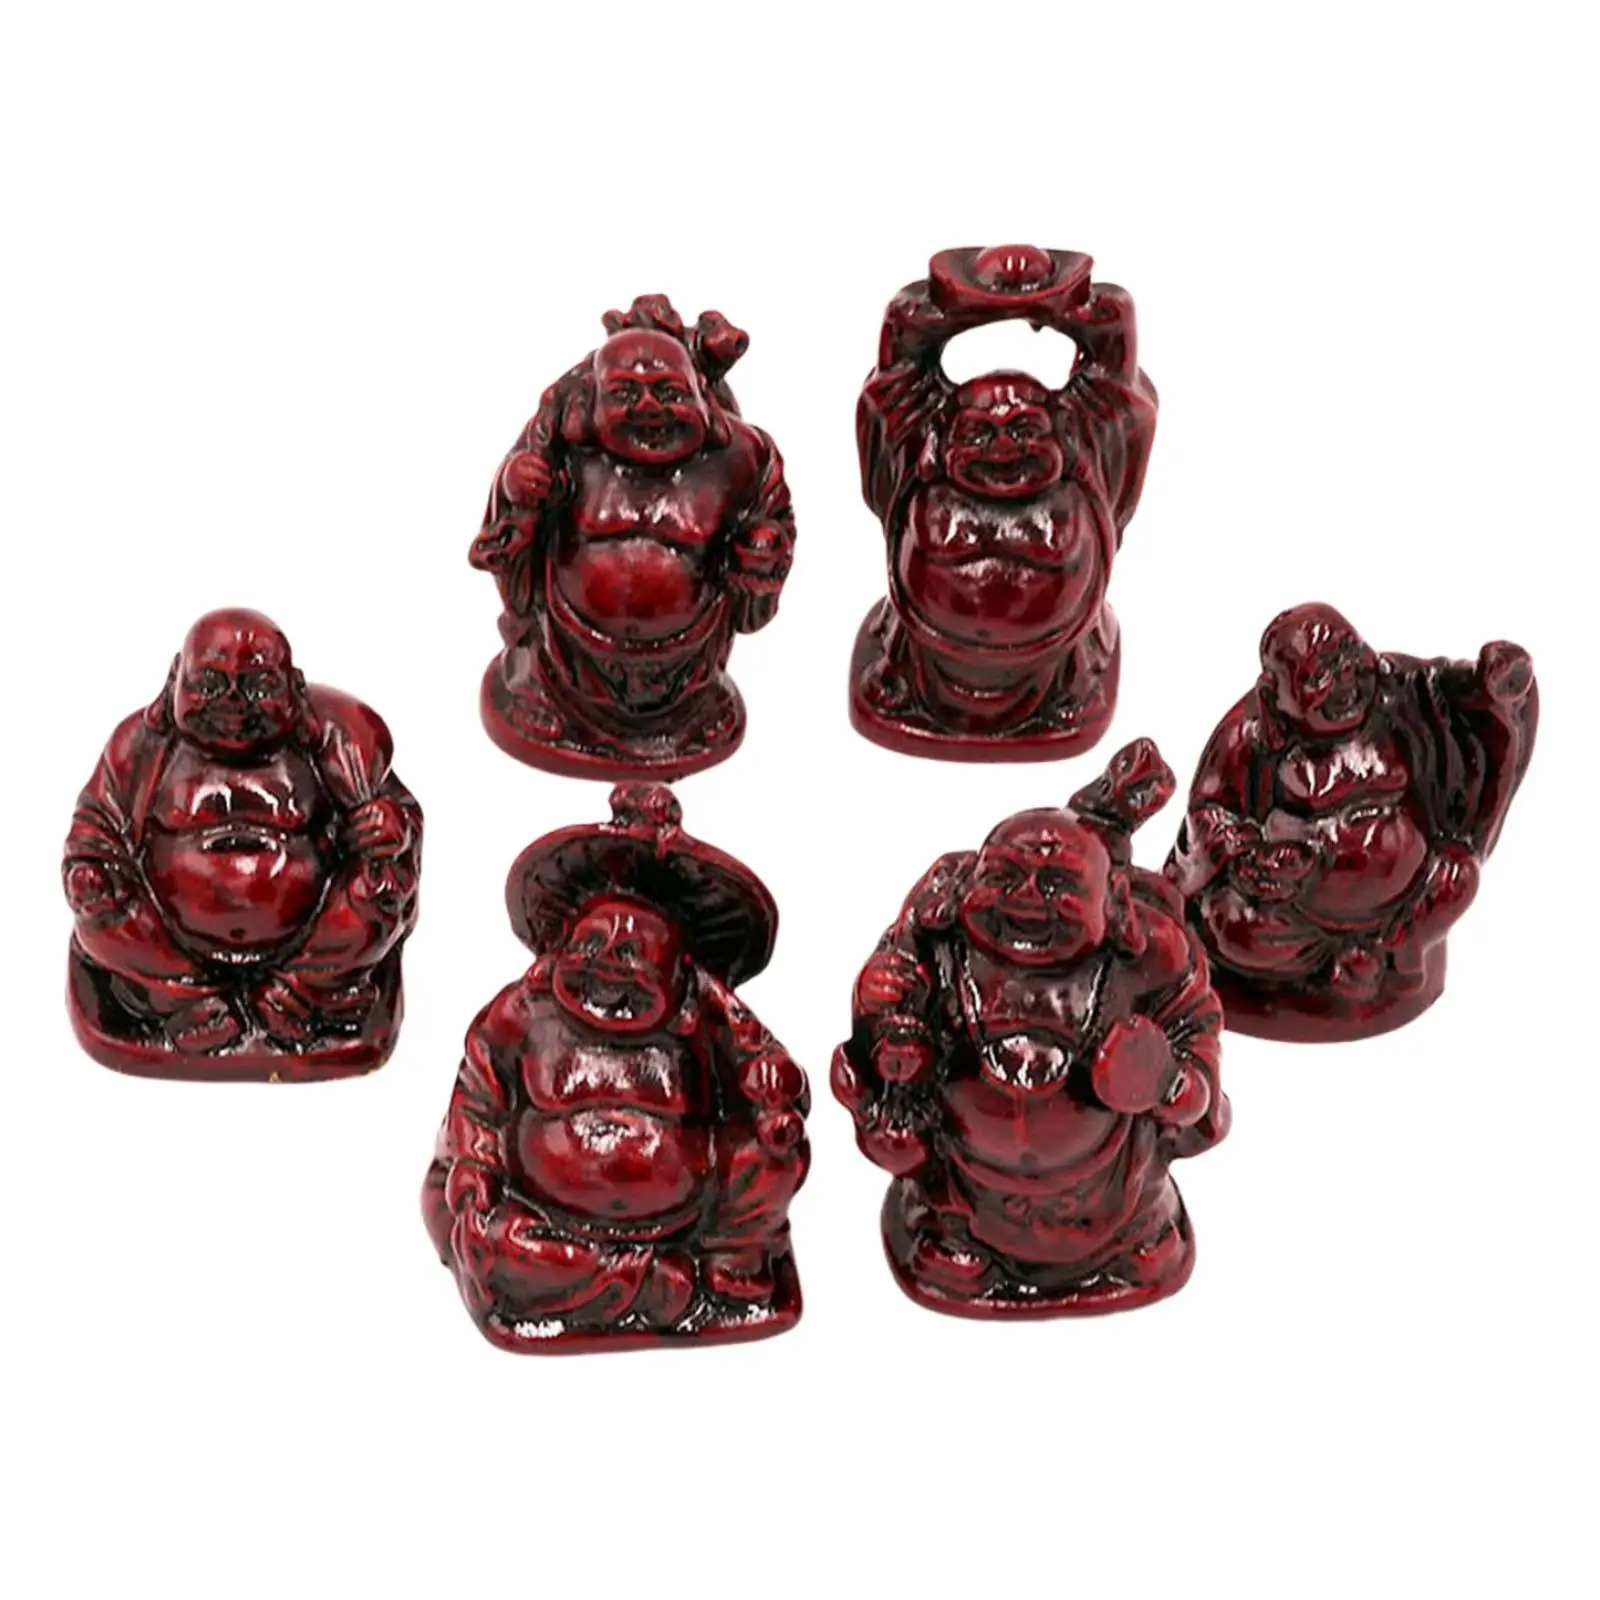 6 Pieces Small Mini Buddha Figurines Statues Sculpture for Office Shelf Desktop Religious Home Decoration